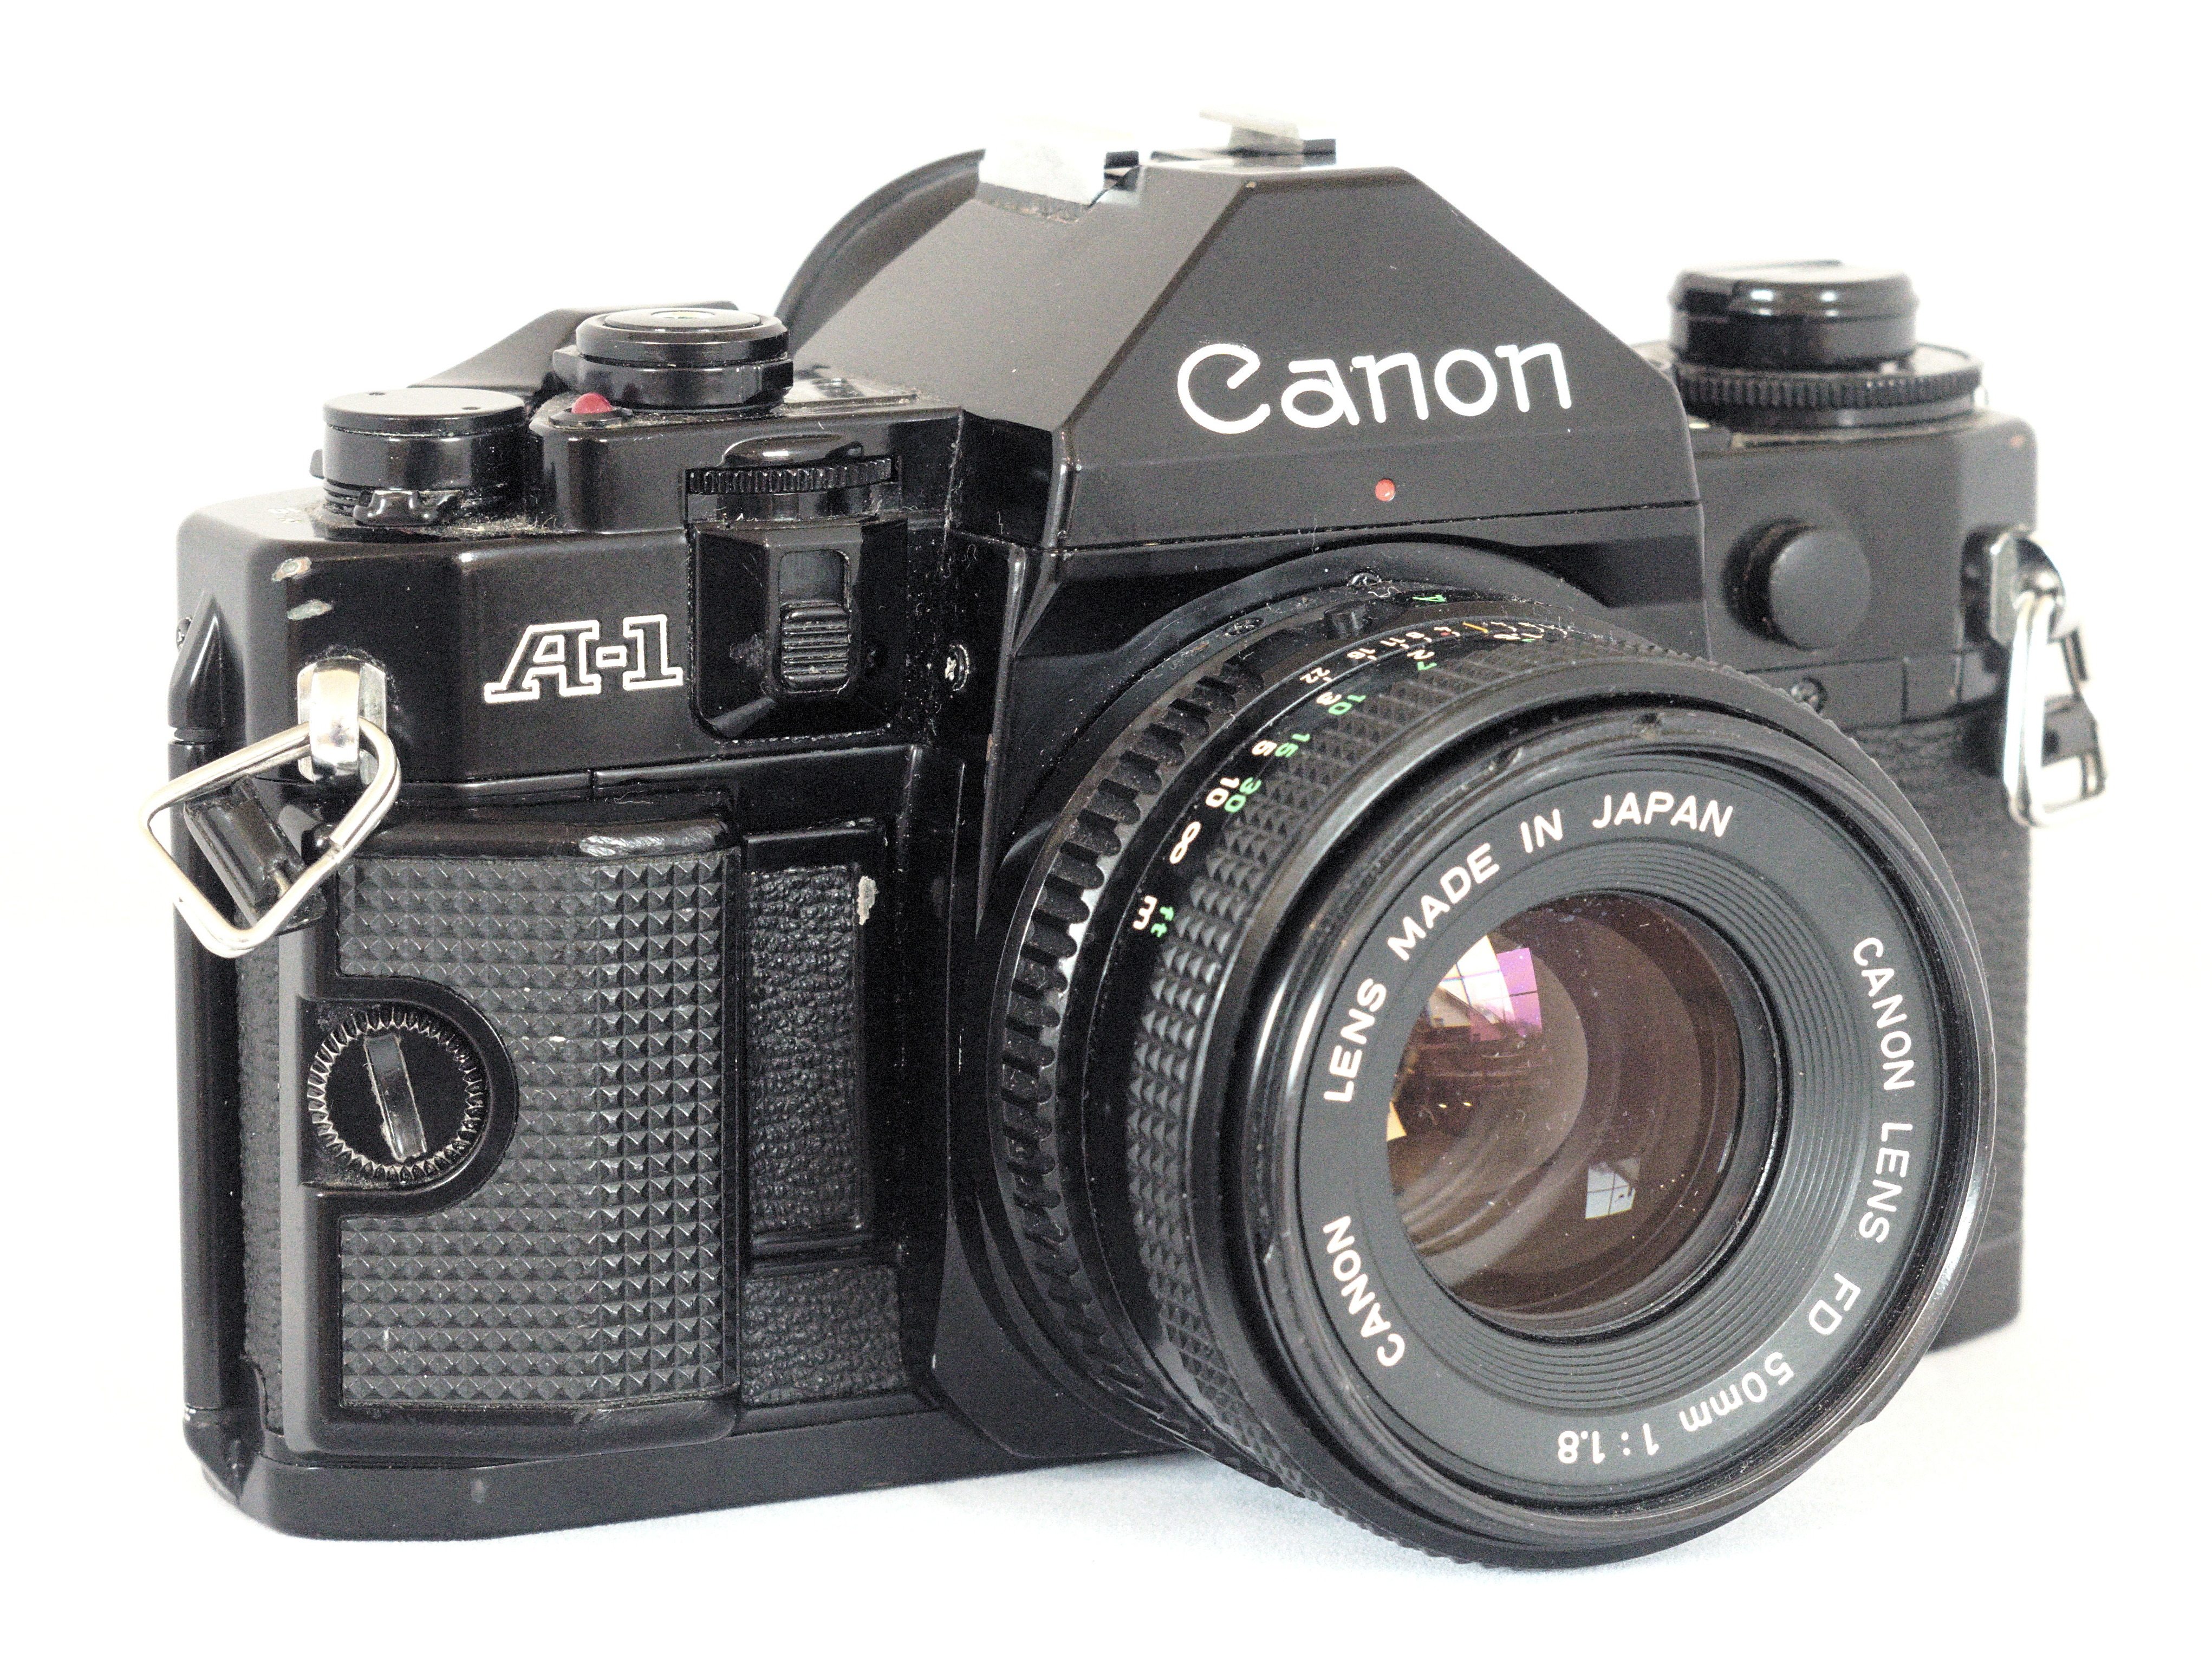 File:Canon A-1 (26329506138).jpg - Wikimedia Commons